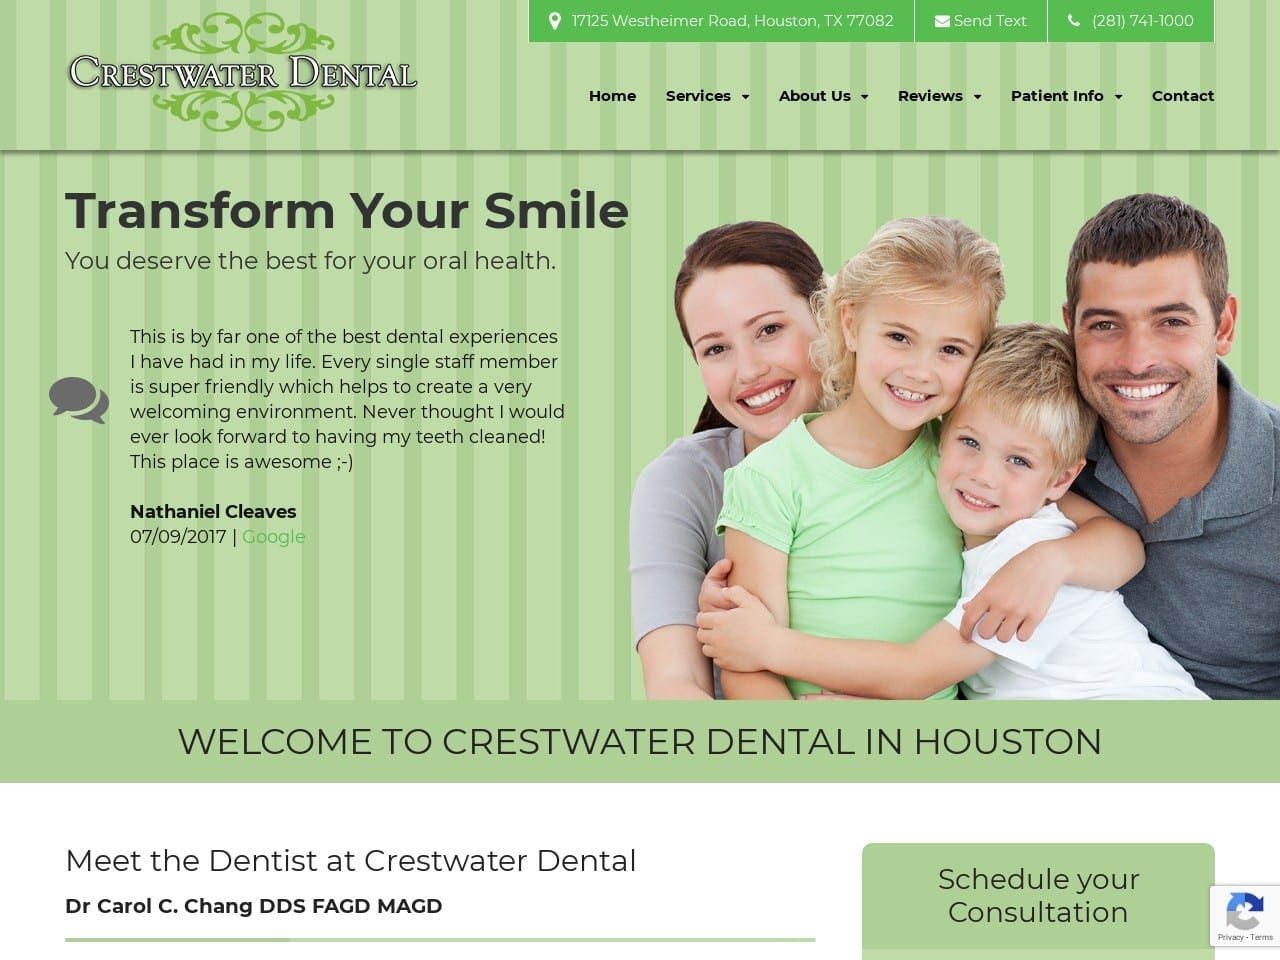 Crestwater Dental Dr Carol C. Chang DDS FAGD Website Screenshot from crestwaterdental.com